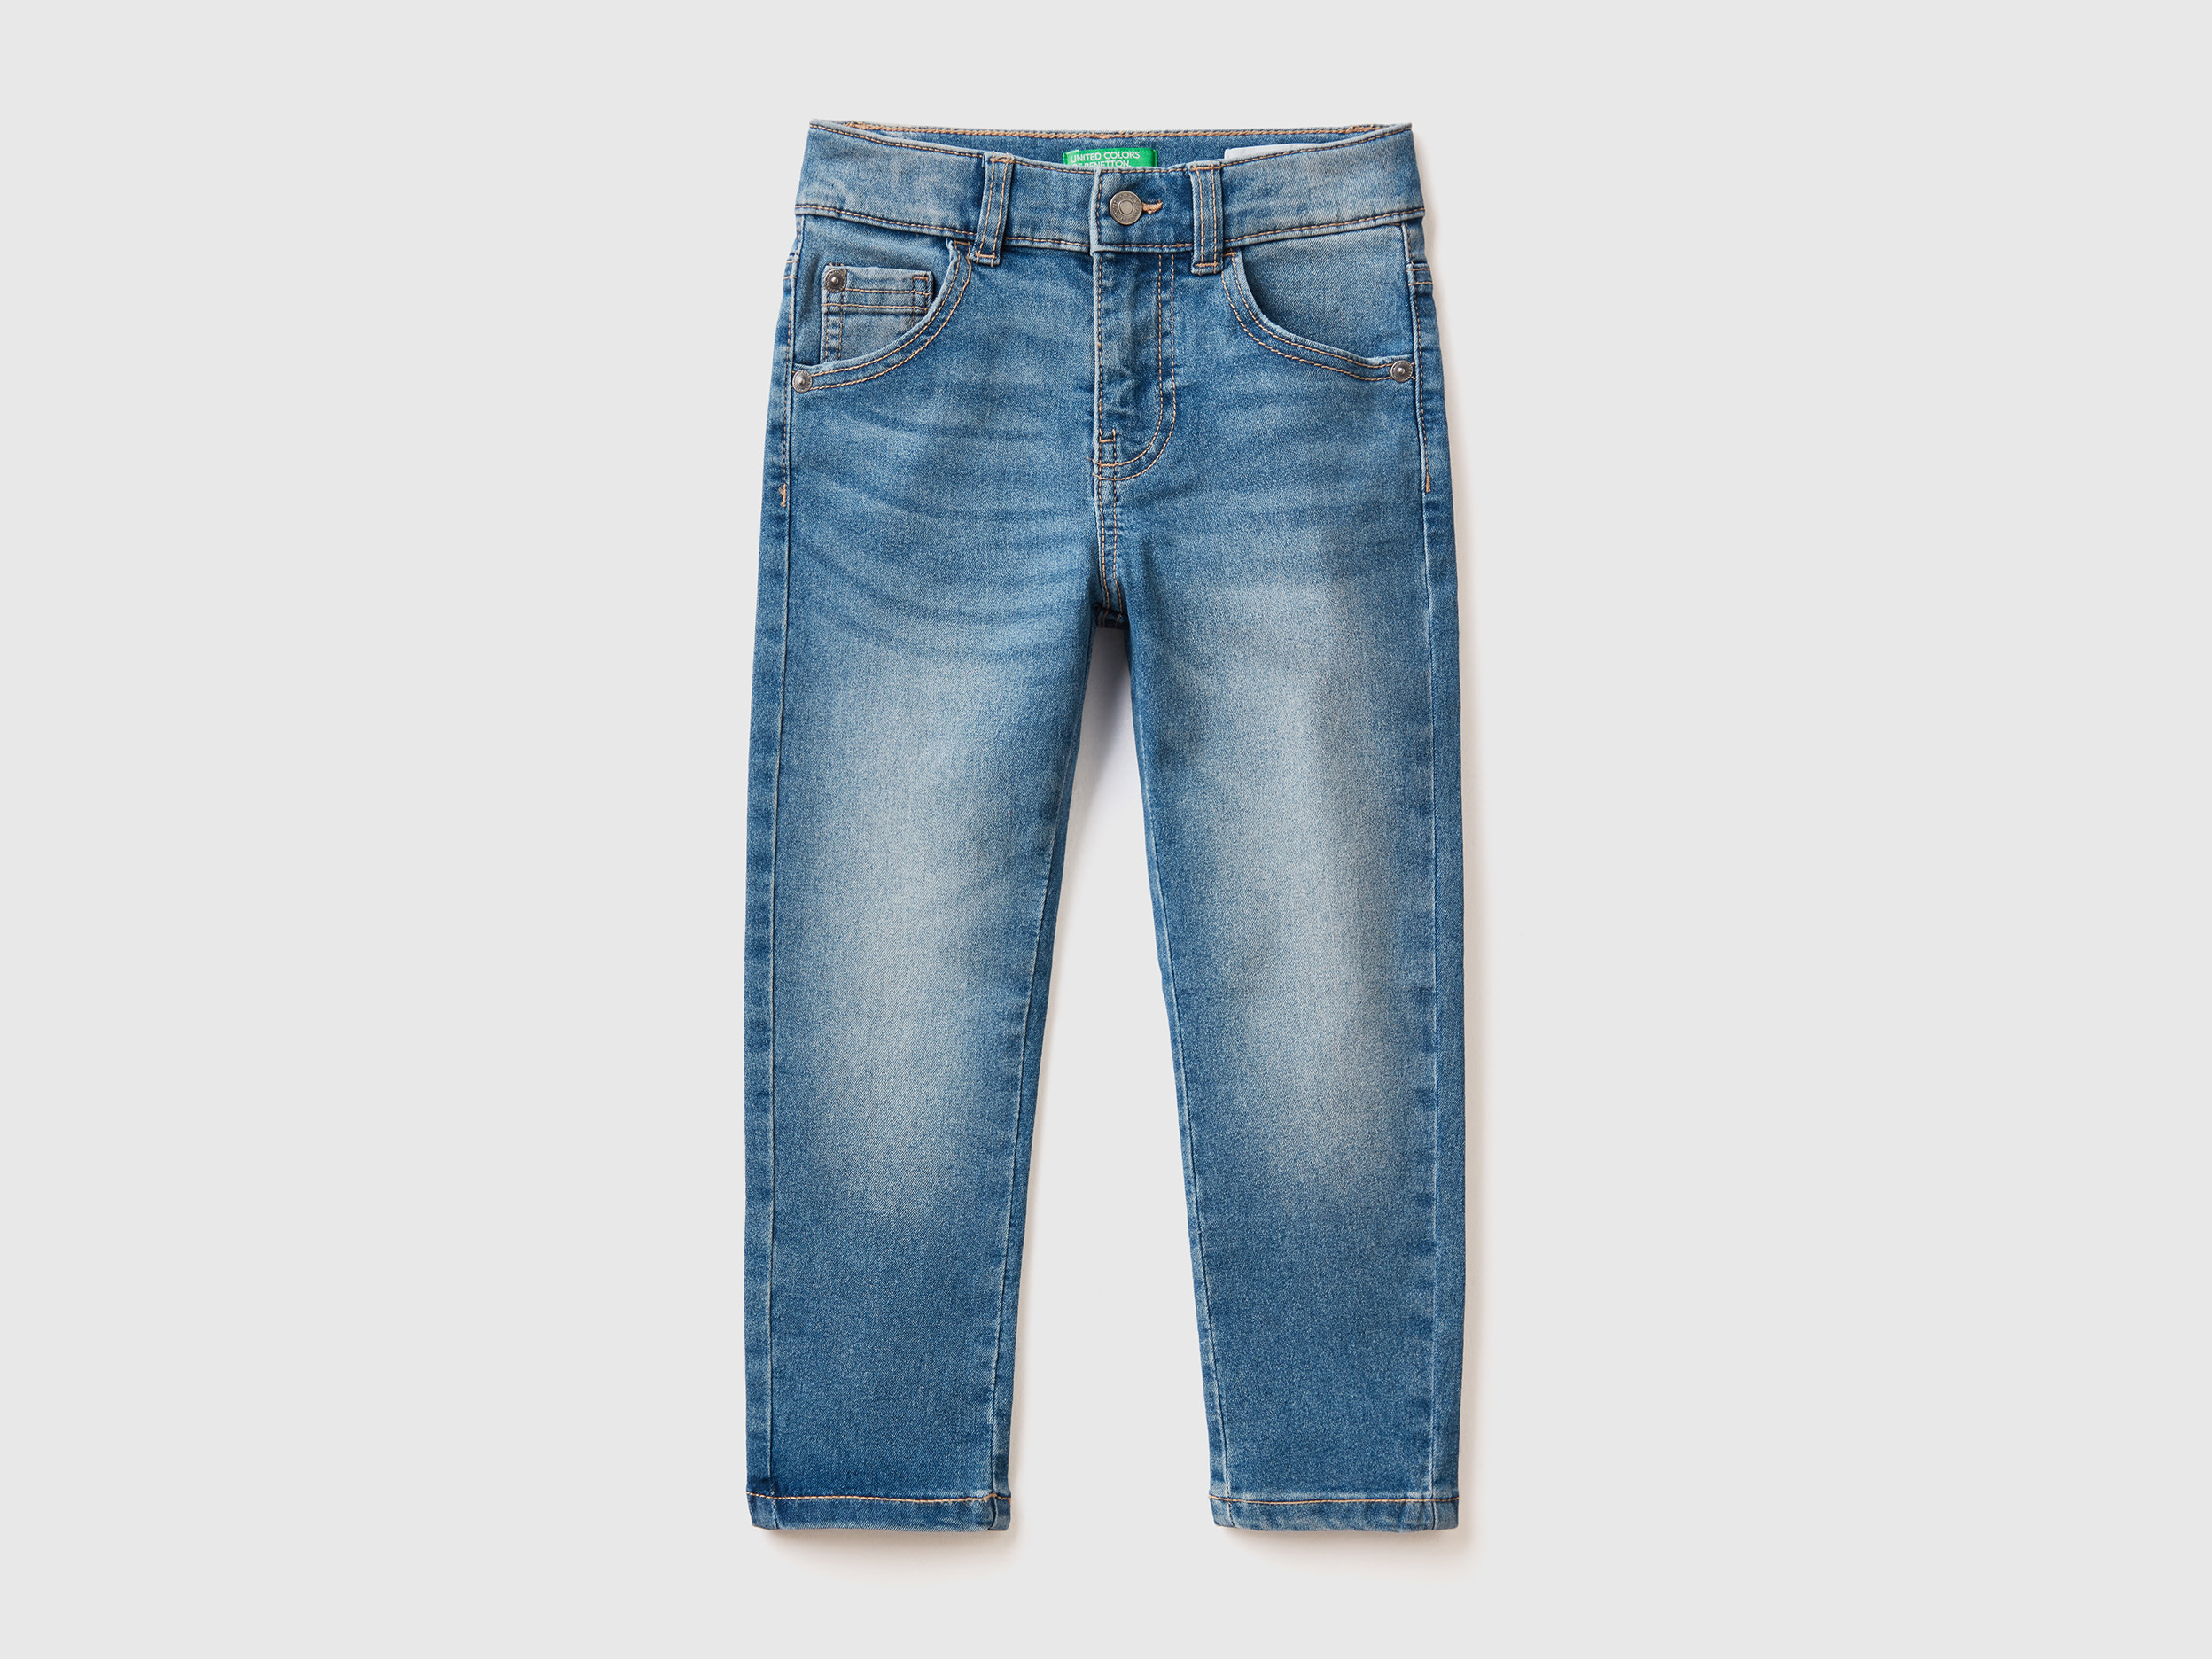 Benetton, Vintage Look Skinny Fit Jeans, size 18-24, Sky Blue, Kids